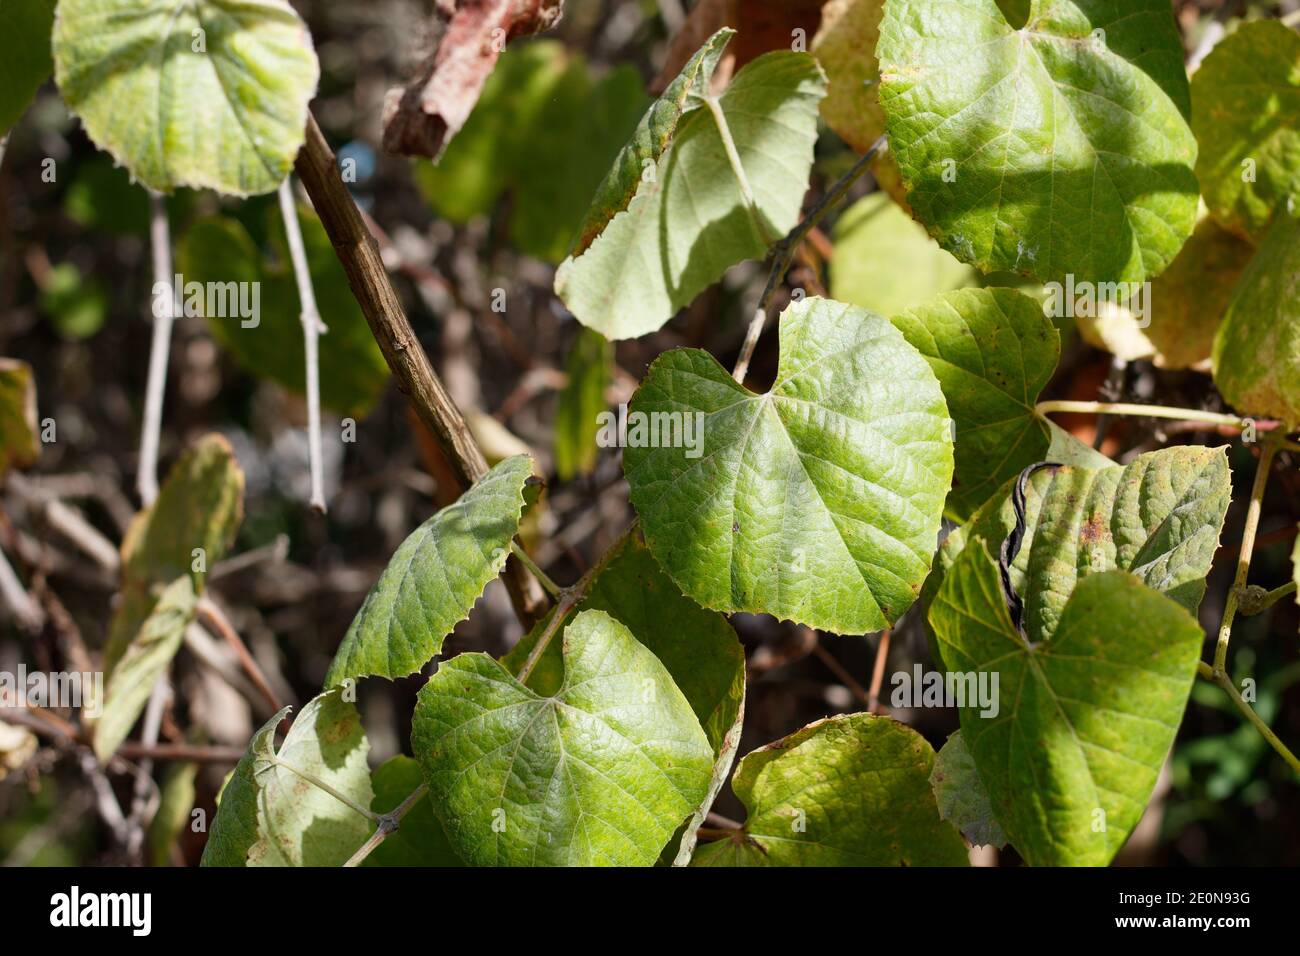 Green cordate leaves, Southern California Grape, Vitis Girdiana, Vitaceae, native vine, Ballona Freshwater Marsh, Southern California Coast, Autumn. Stock Photo